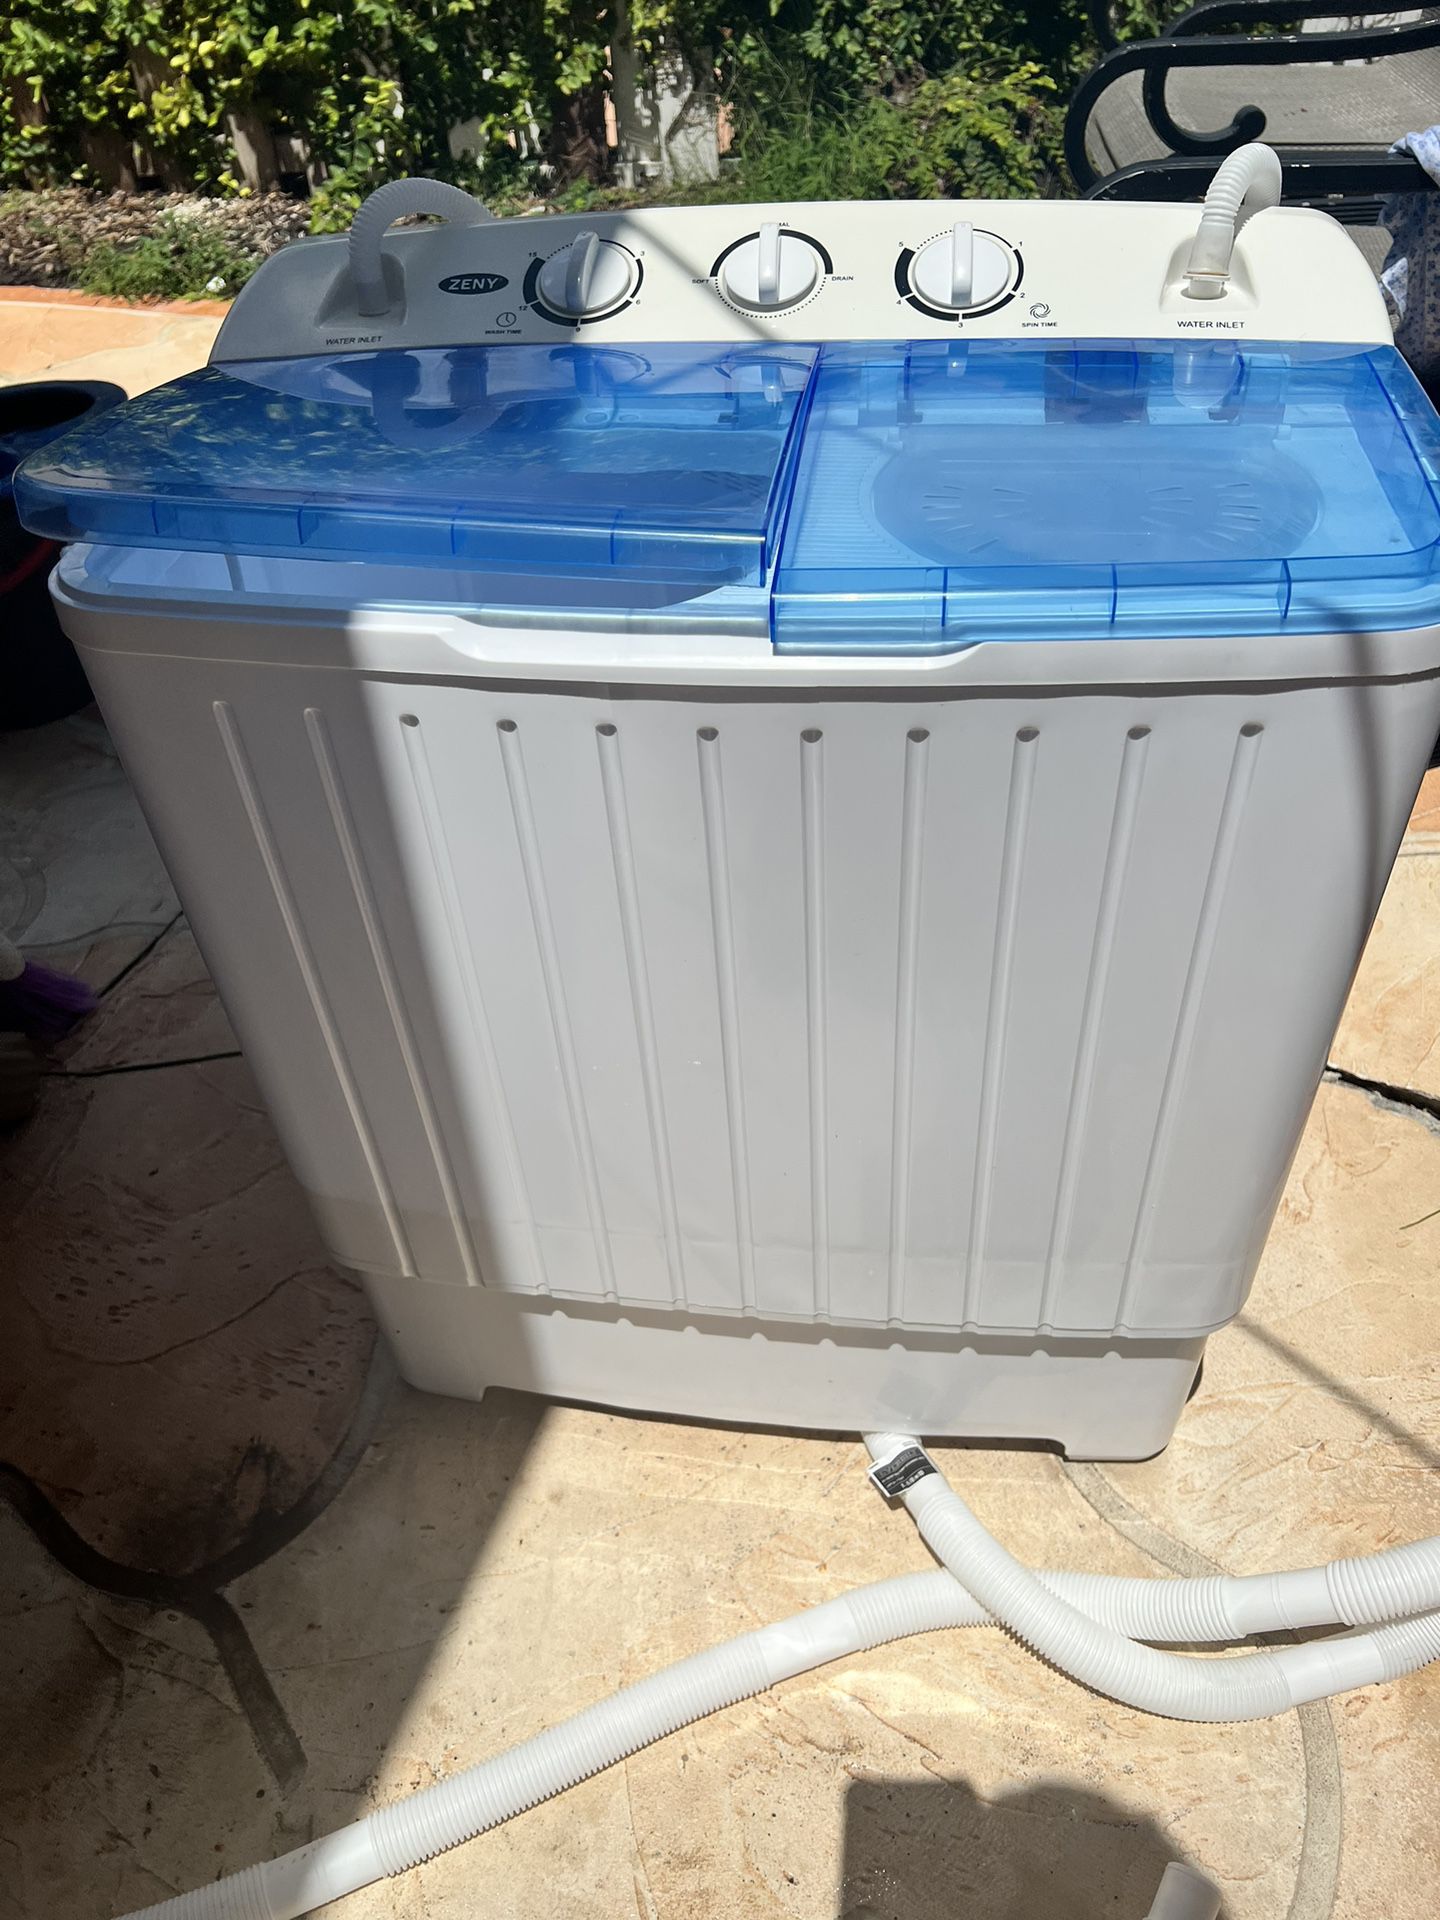 ZENY Portable Washing Machine